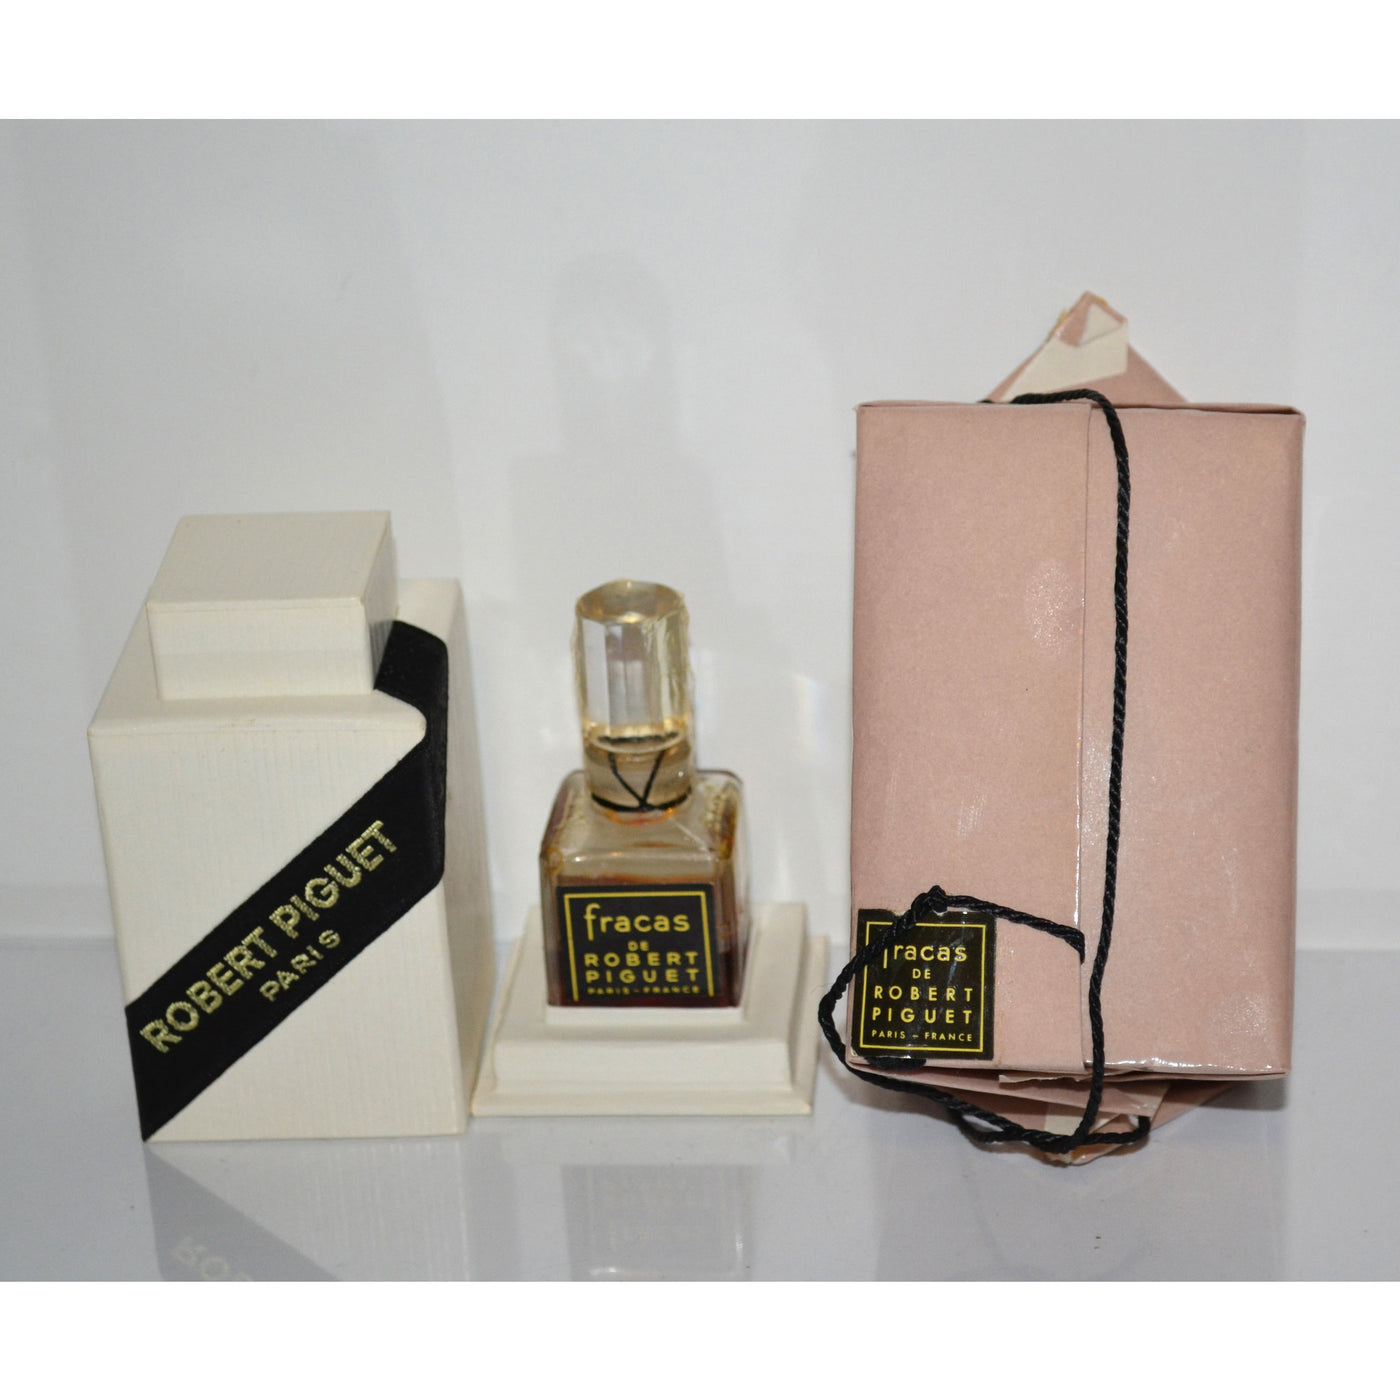 Vintage Robert Piguet Fracas Parfum